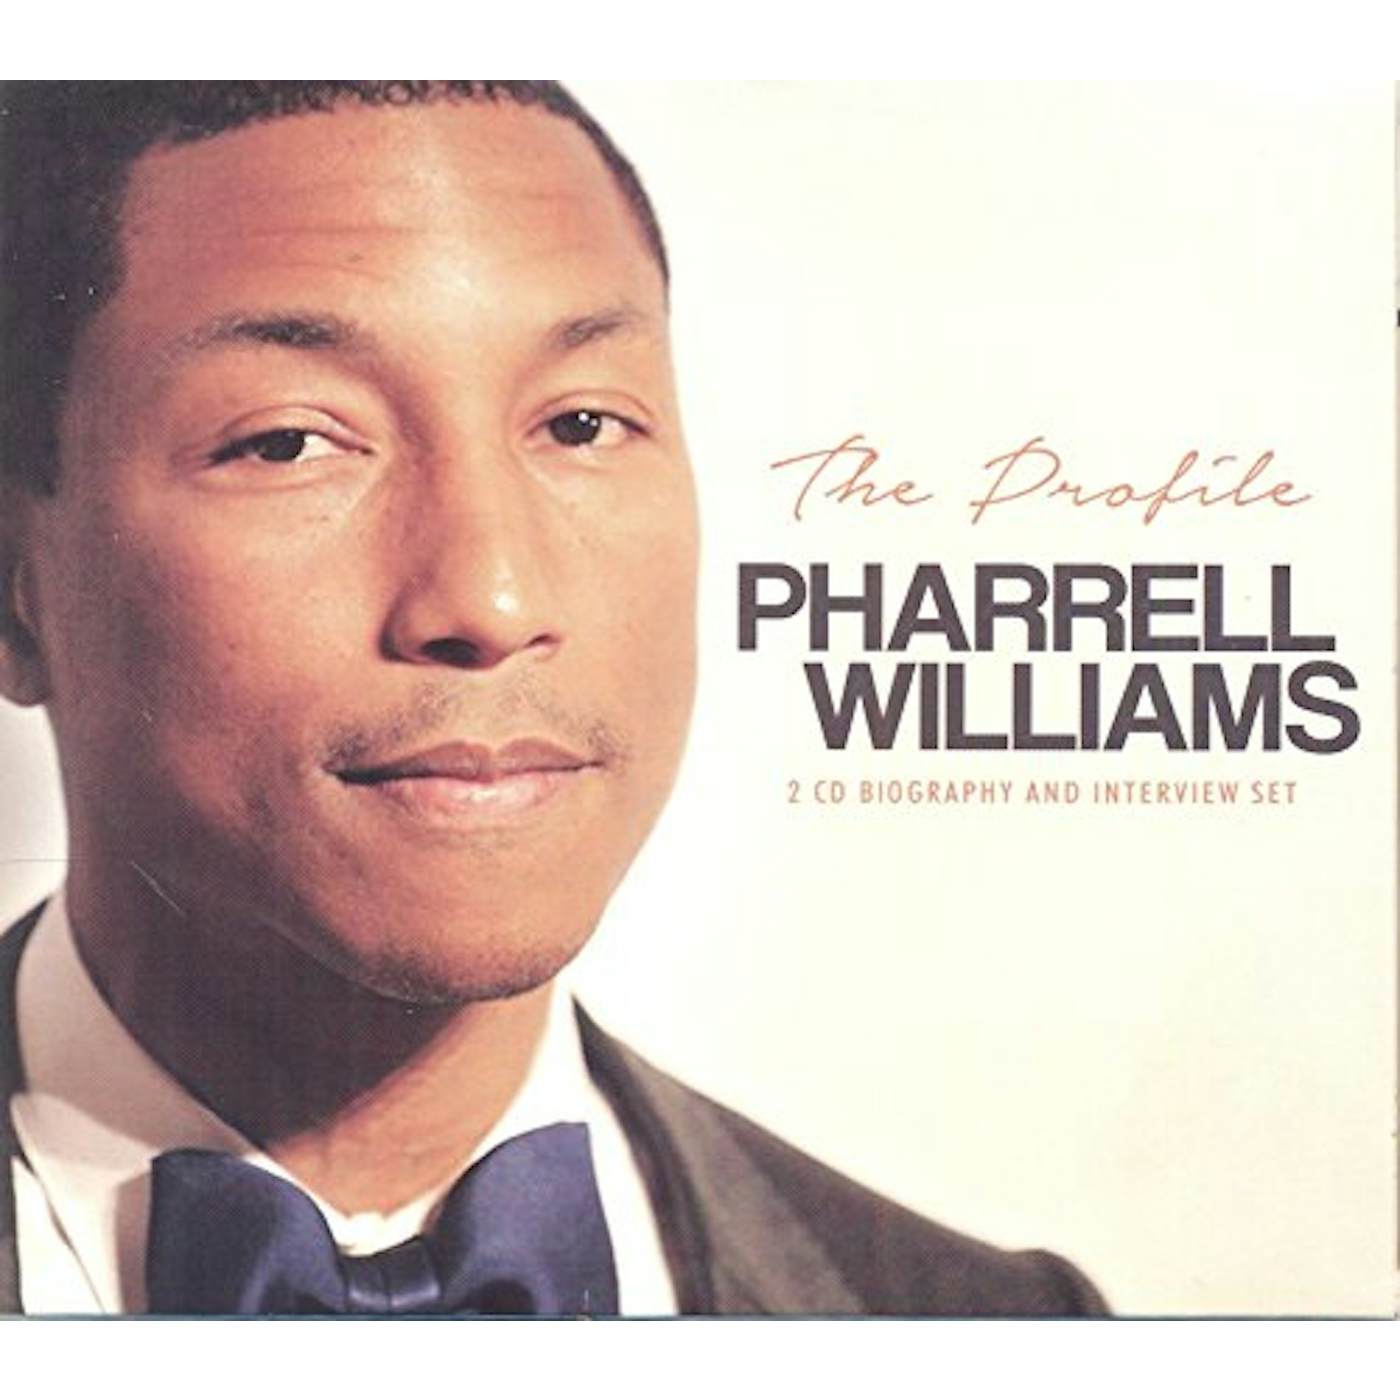 Pharrell Williams PROFILE CD